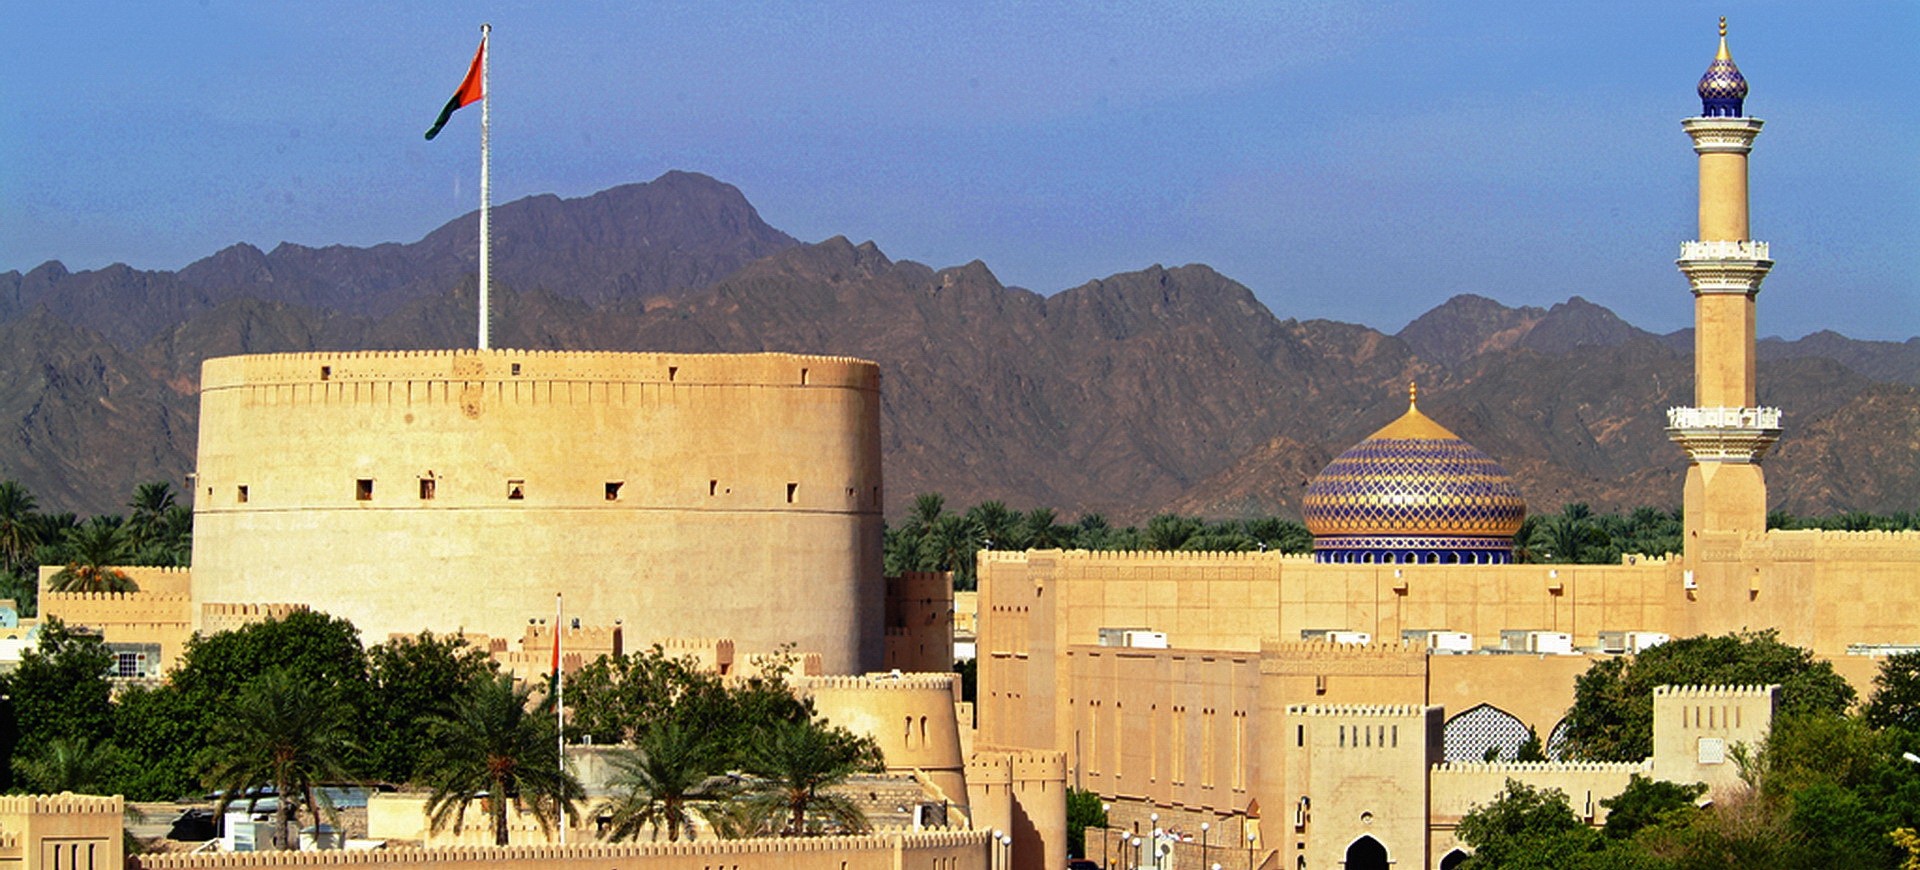 Oman Nizwa Fort et Mosquée Sultan Qaboos